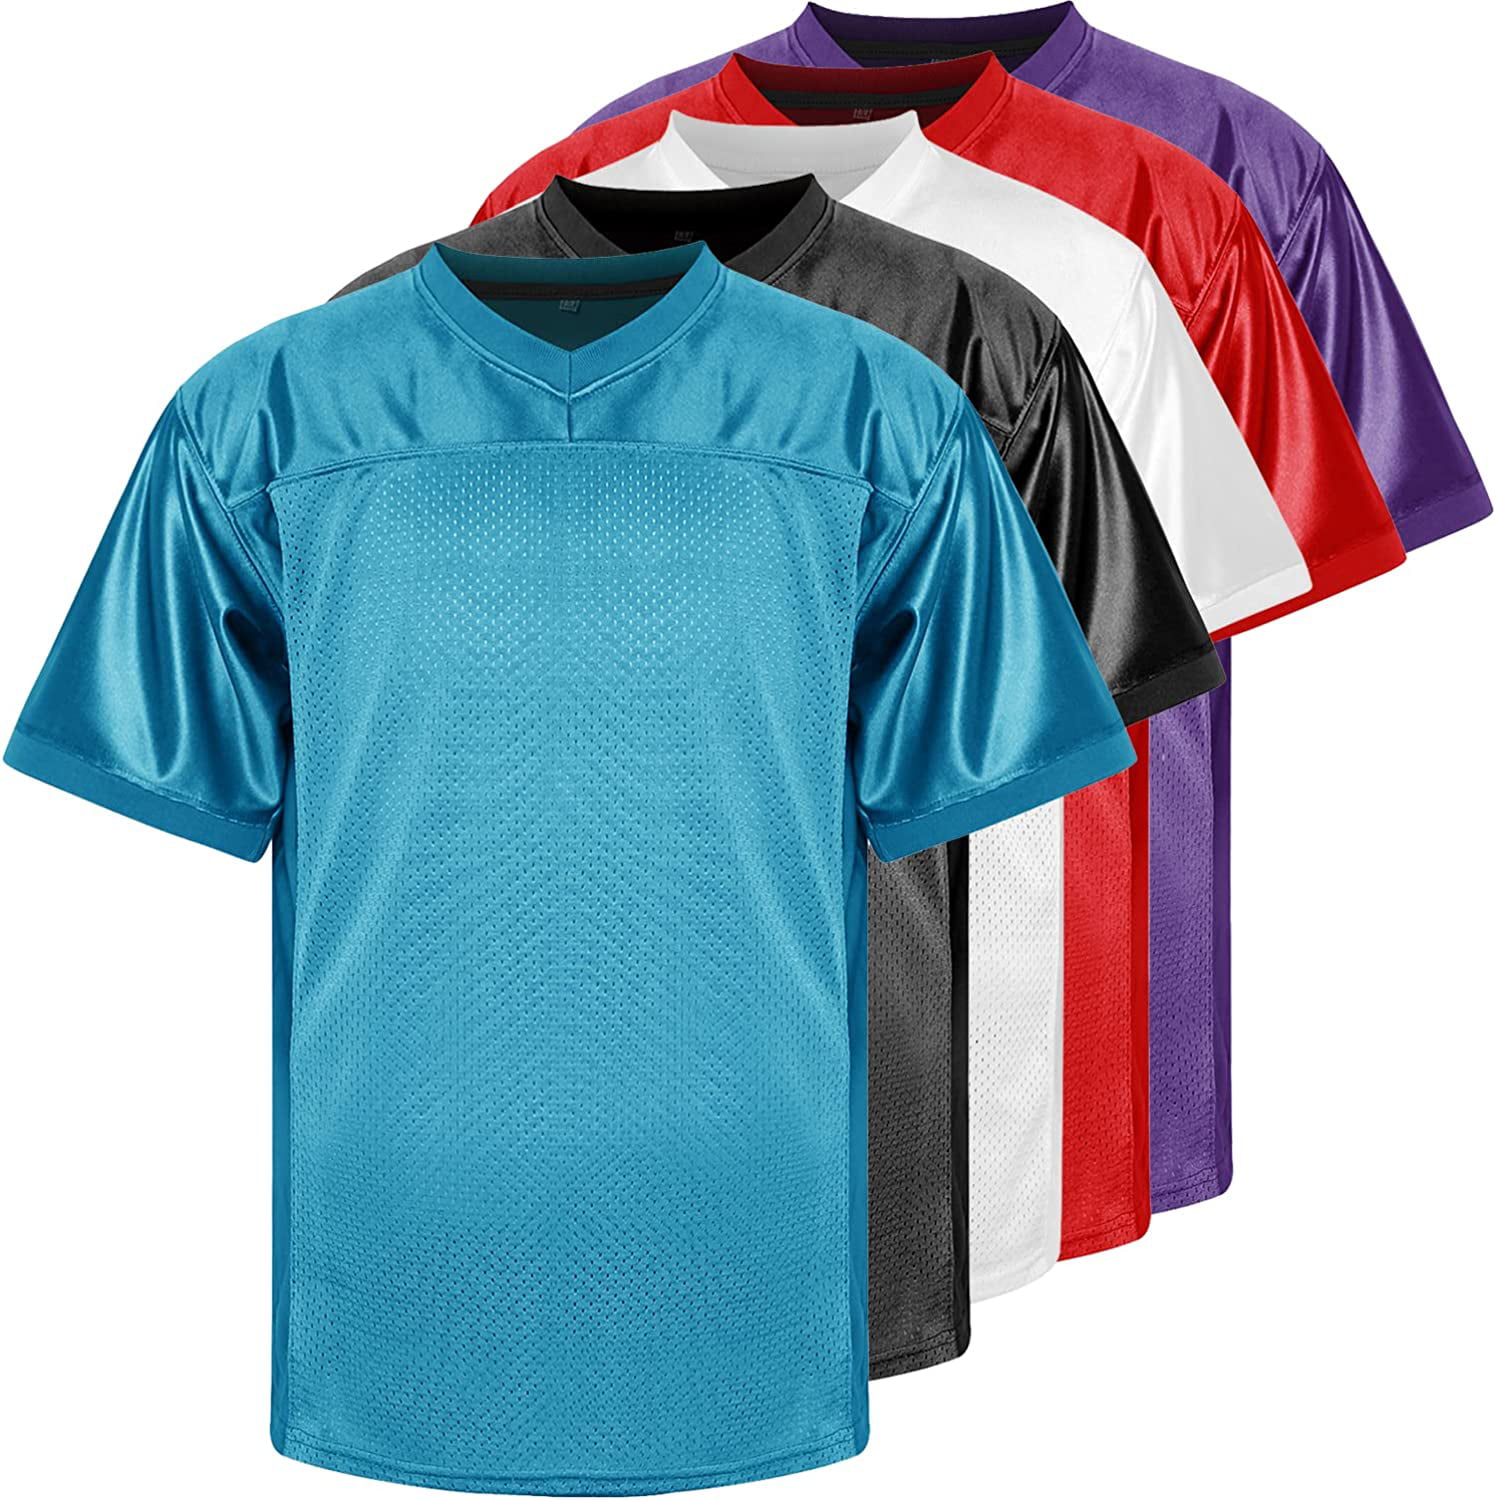 Blank Blue Football Jersey Uniform Wholesale - Jersey One